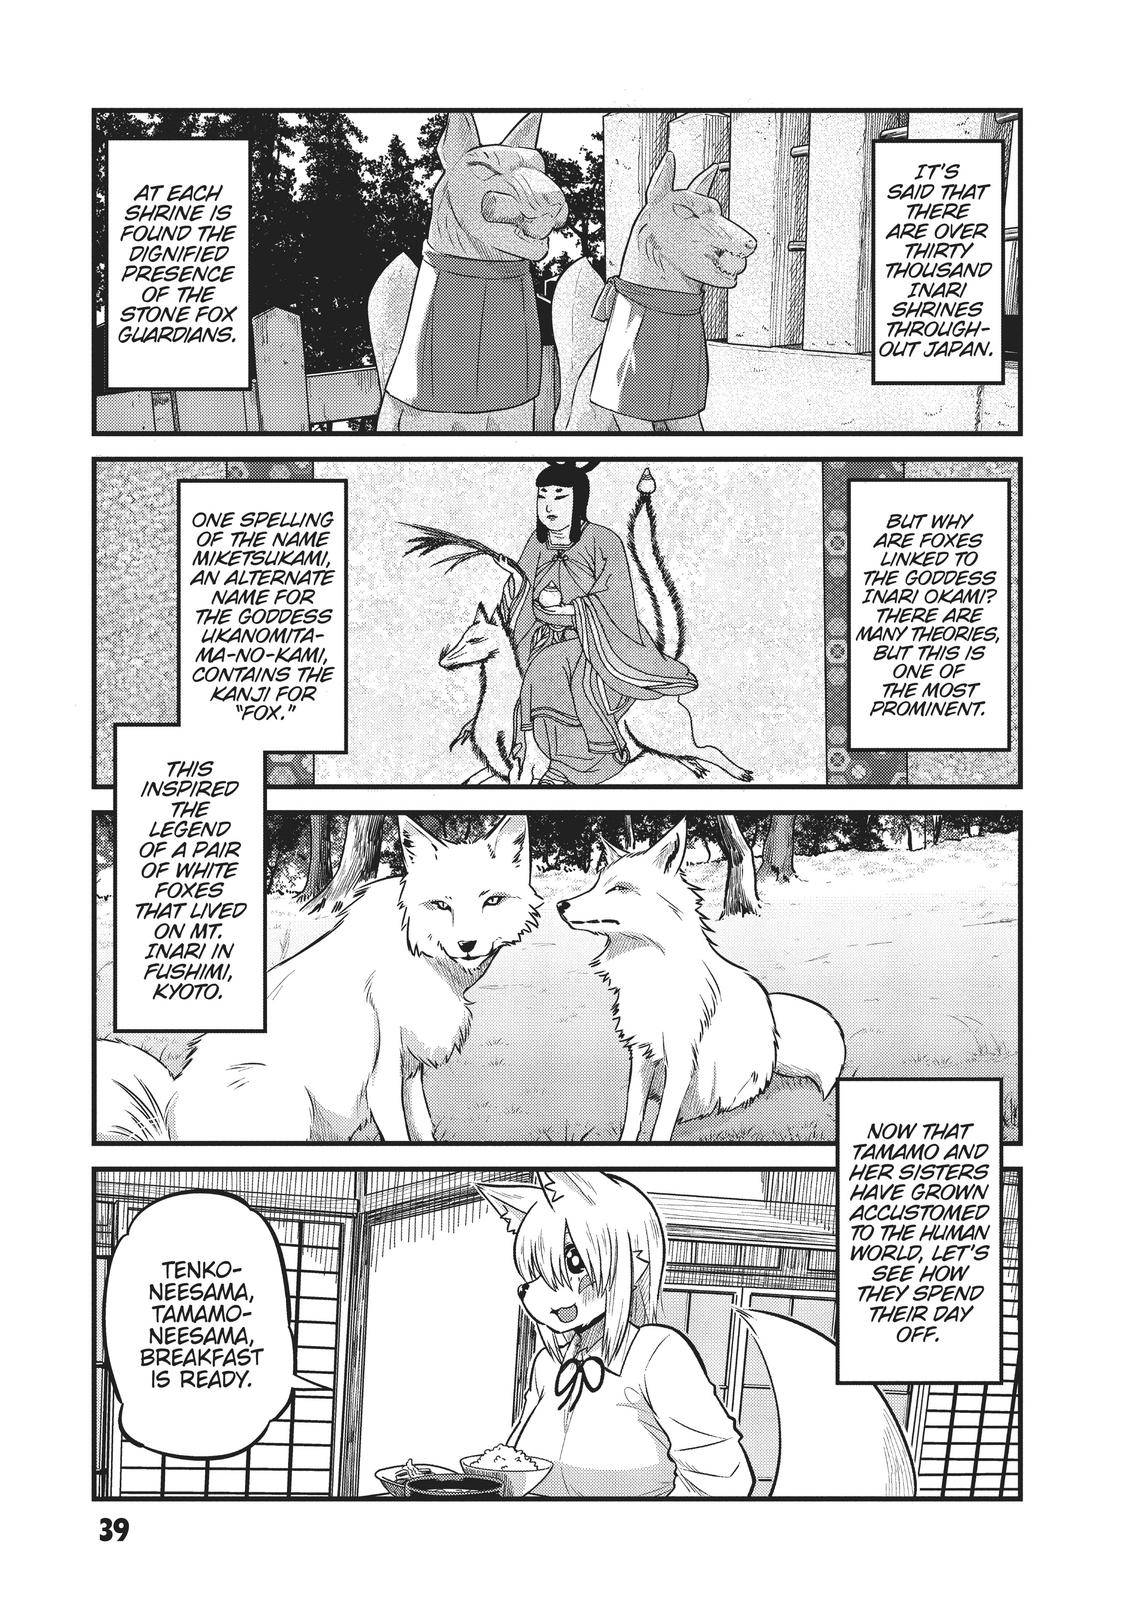 Tamamo-chan's a Fox! - chapter 36 - #1